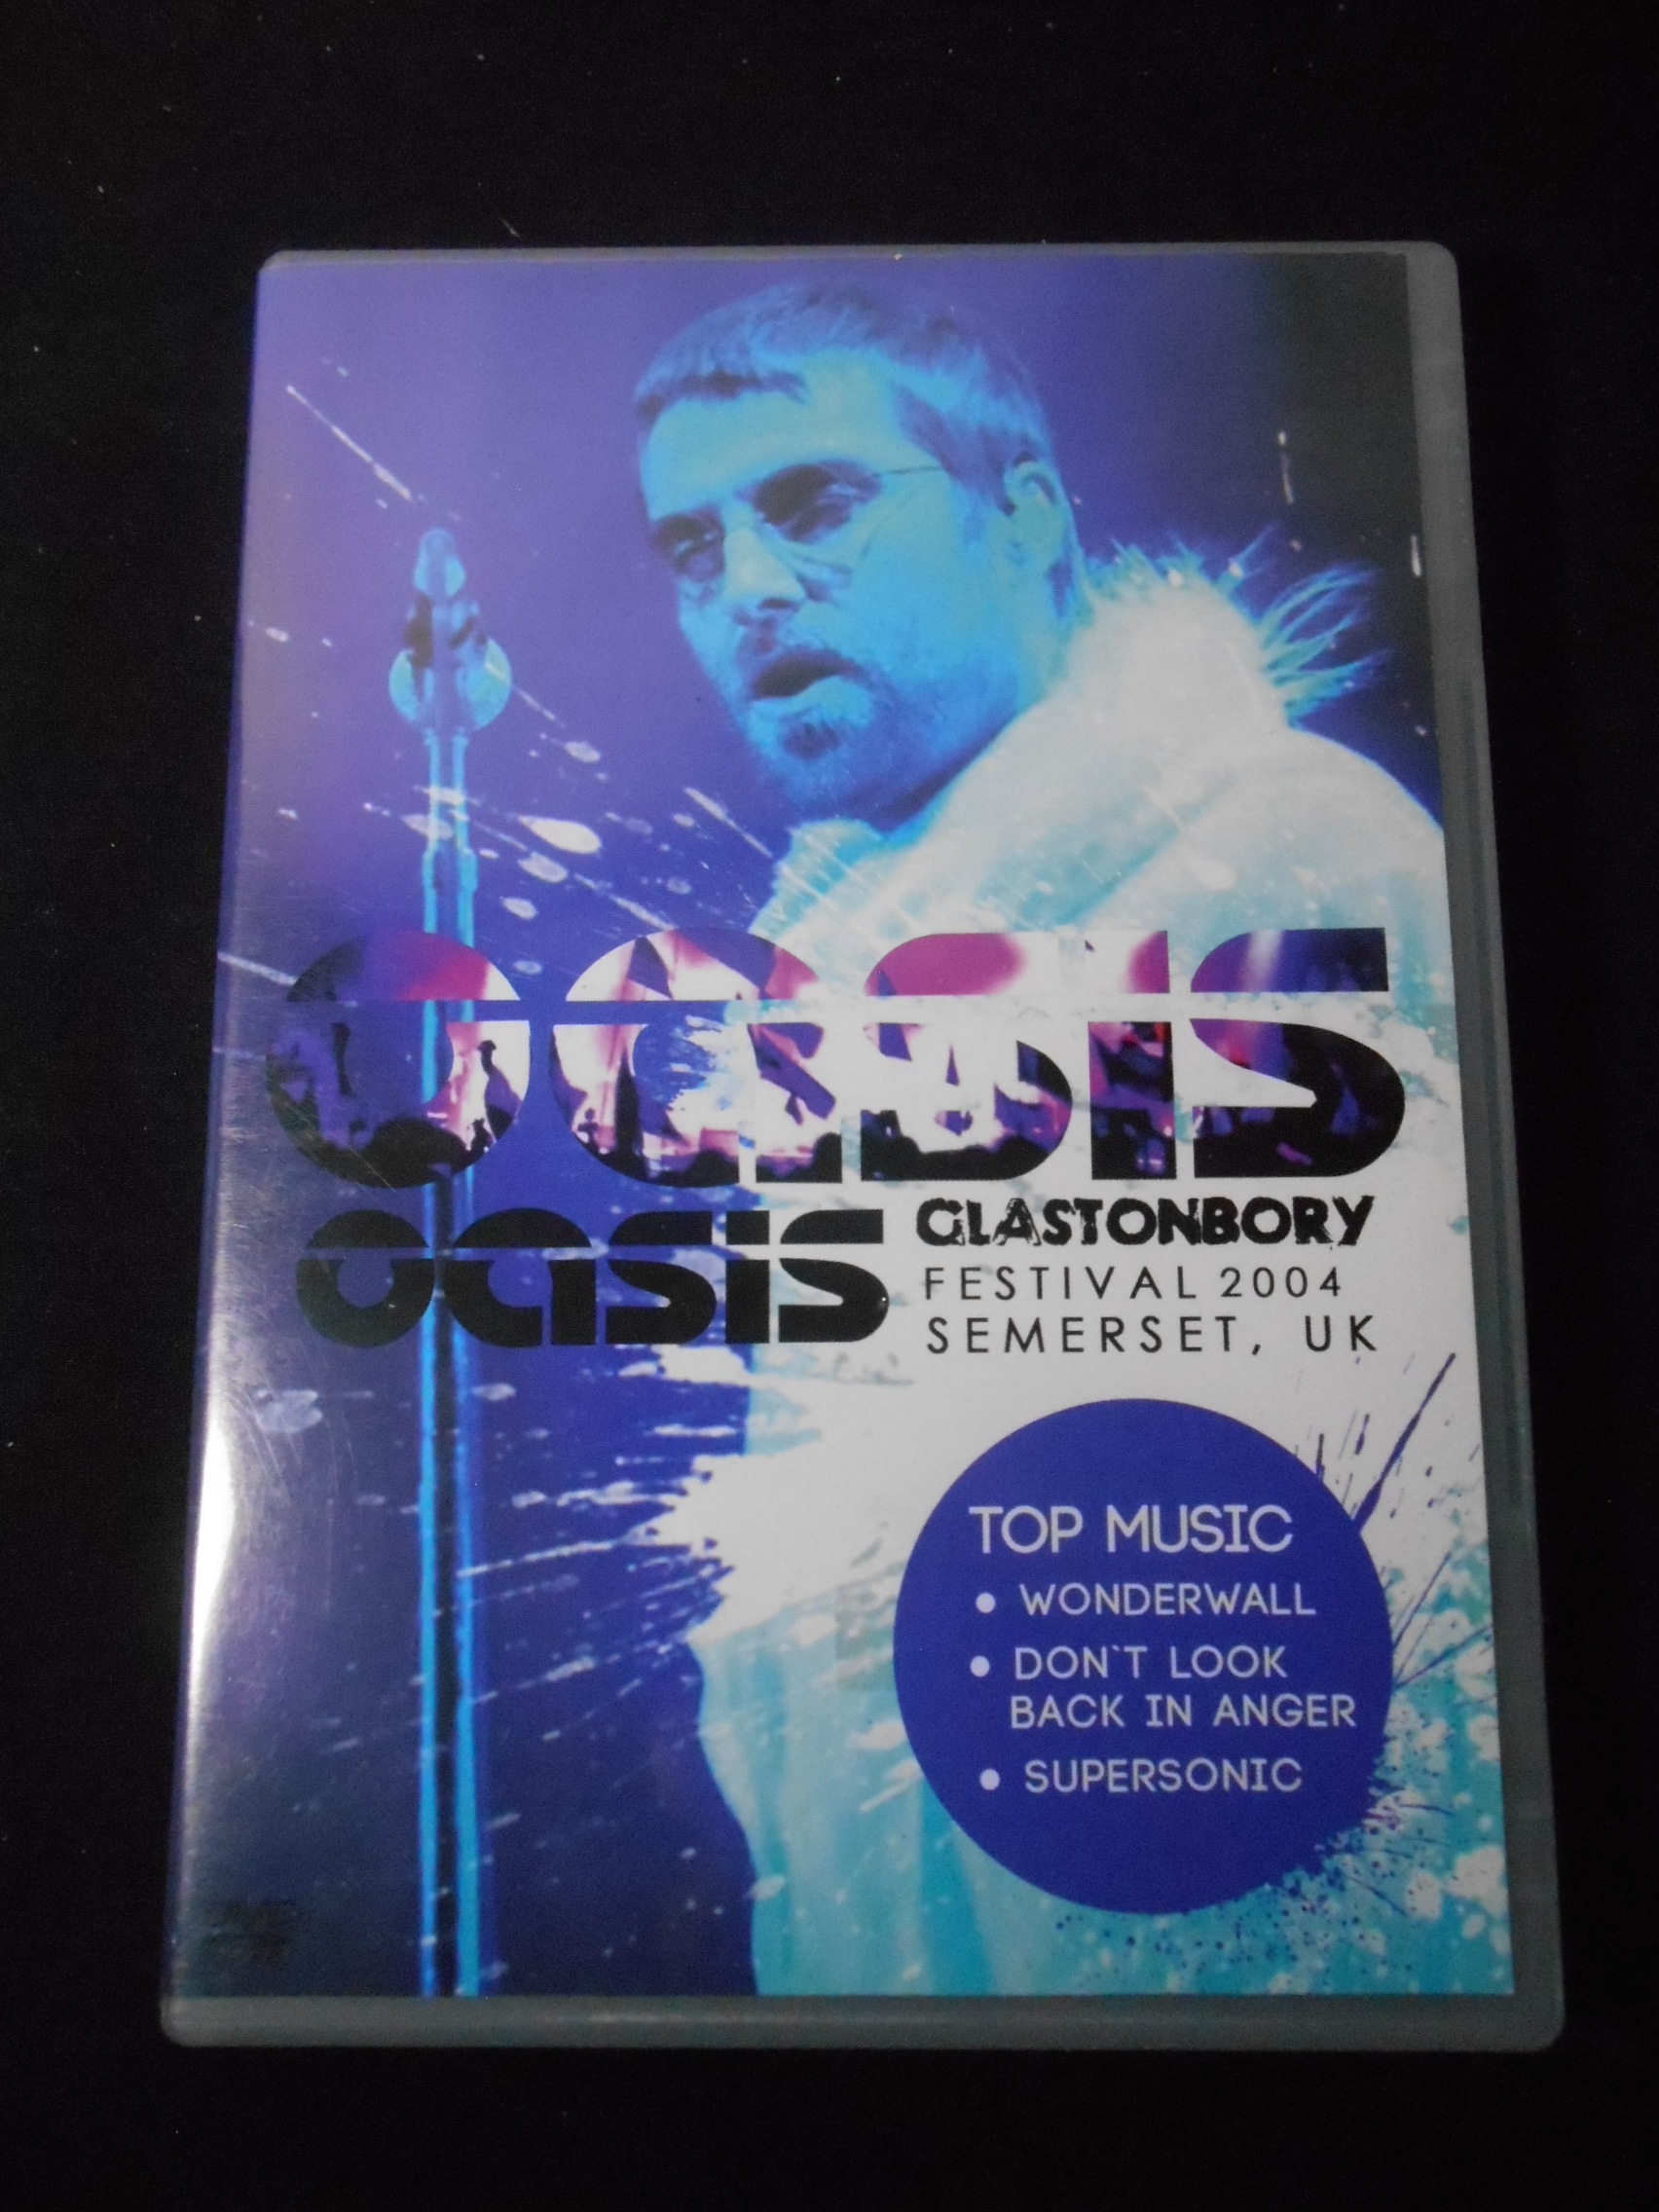 DVD - Oasis - Glastonbury Festival 2004 Semerset, UK